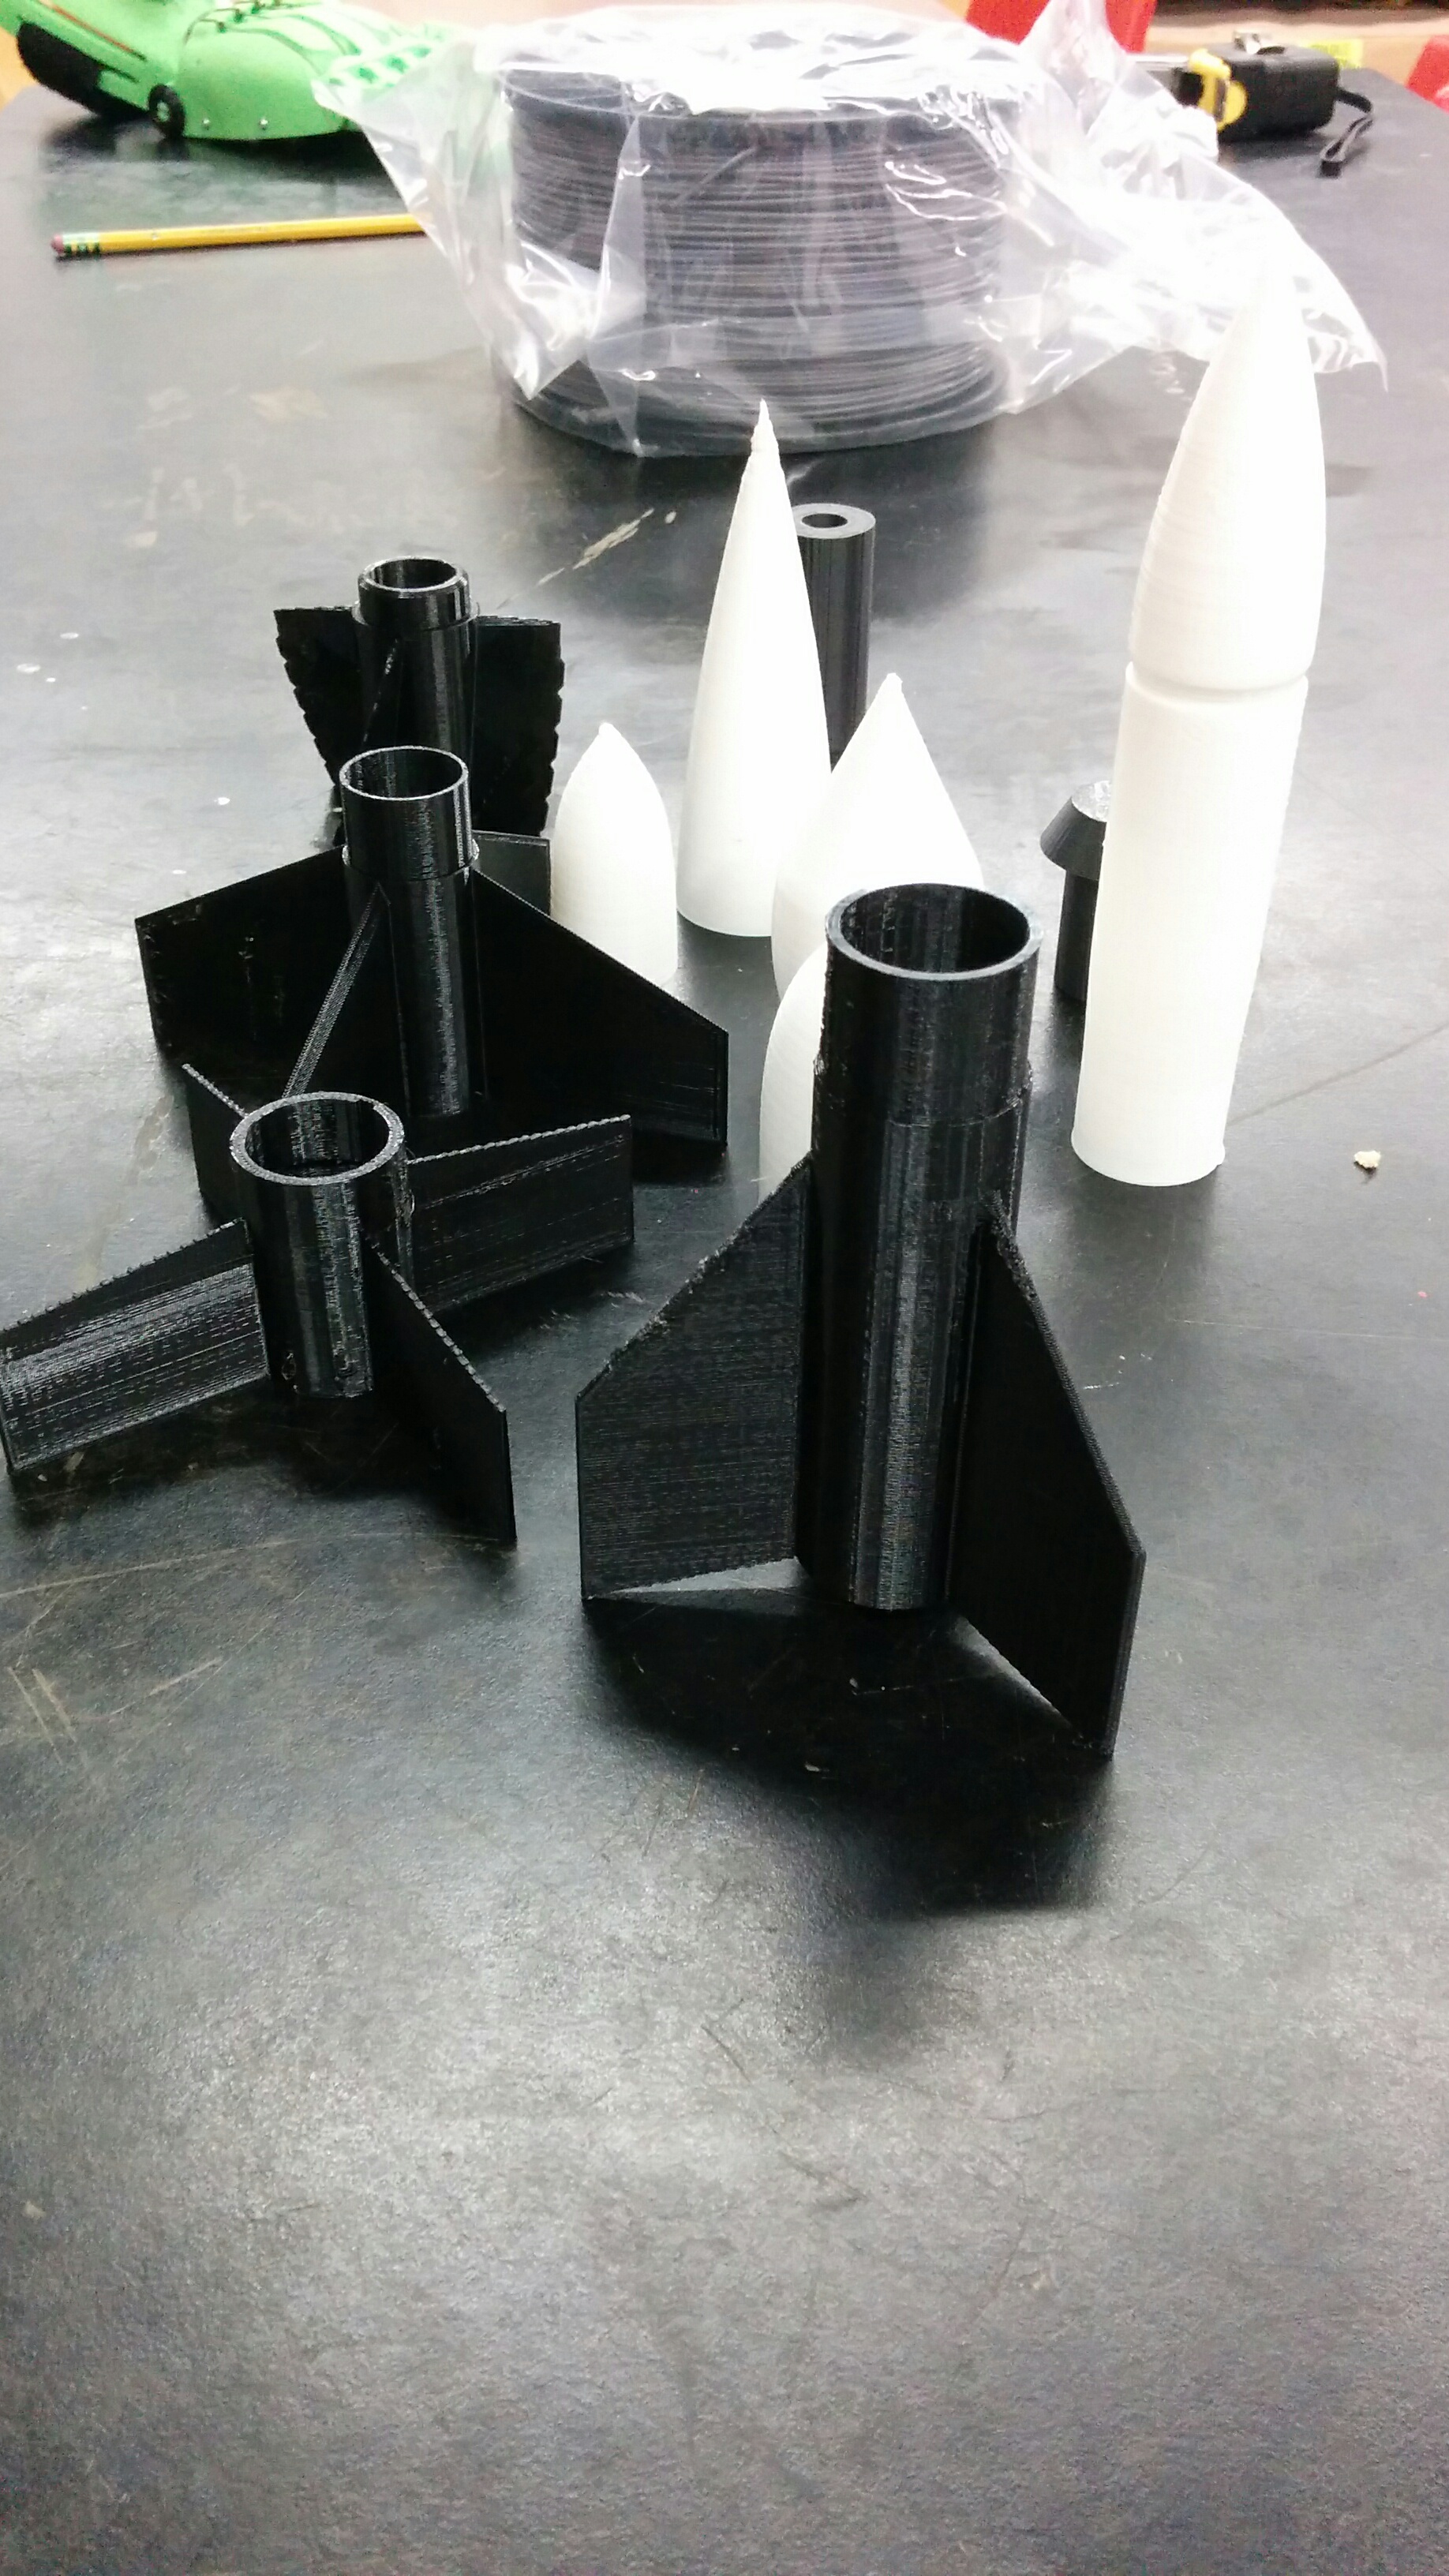 3D Printed Rockets 2016